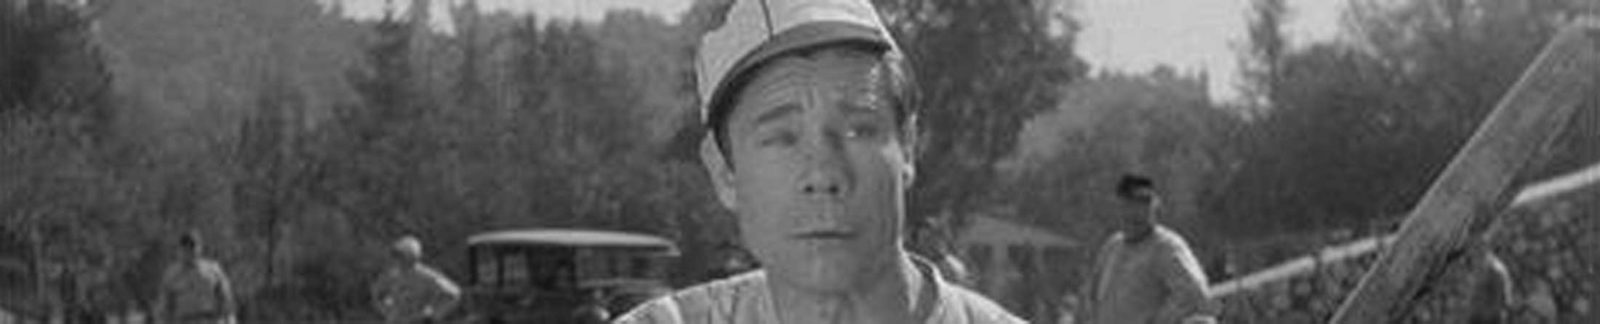 Elmer, the Great - baseball movie header